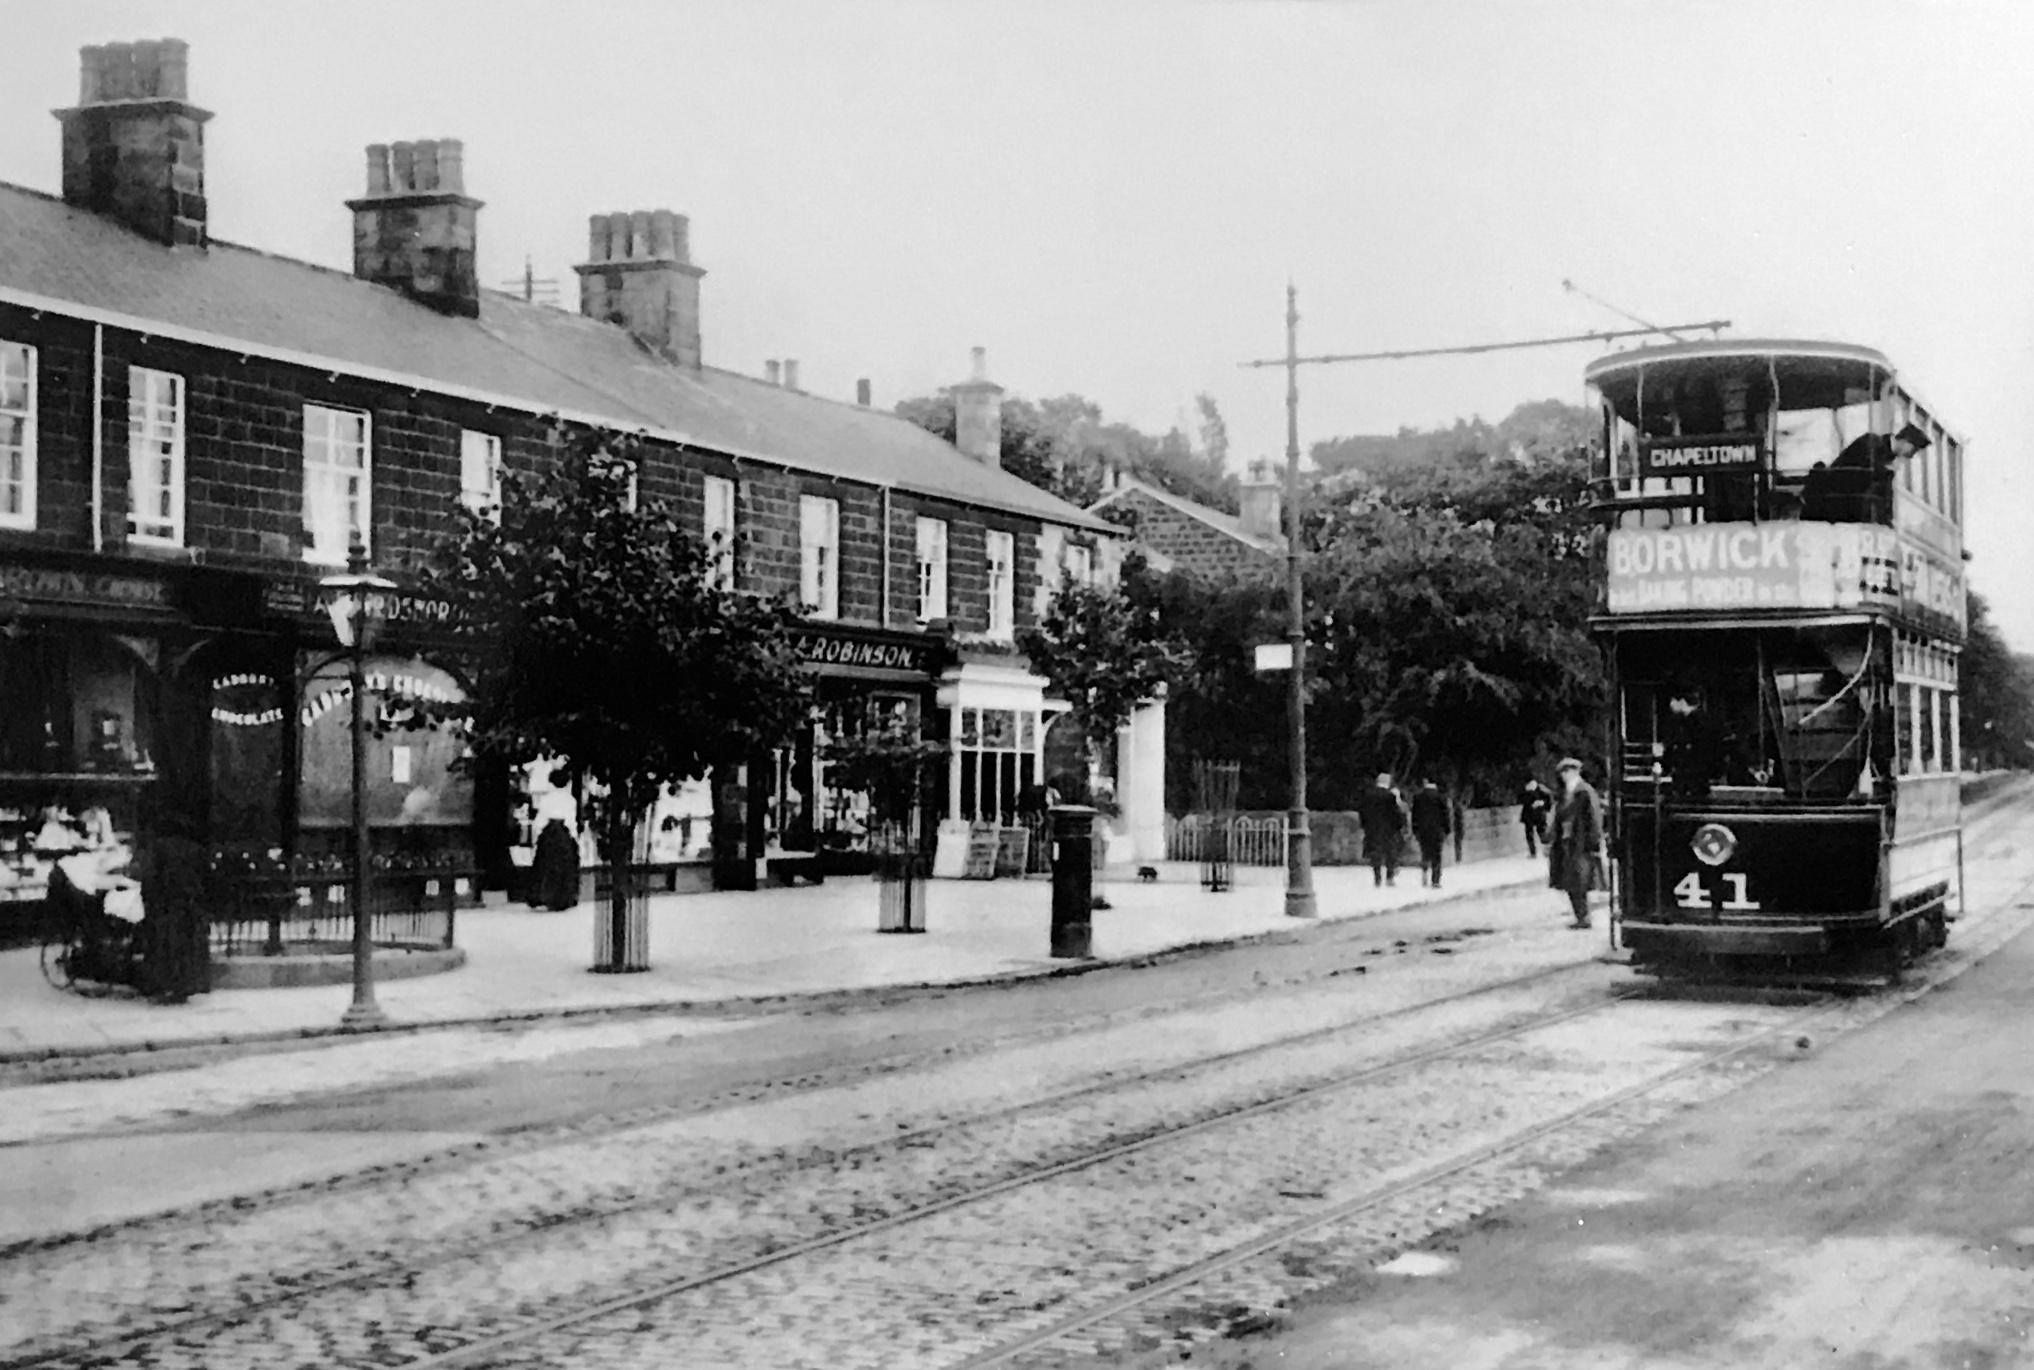 Tram No 41, destination Chapeltown, Otley Road, circa 1910